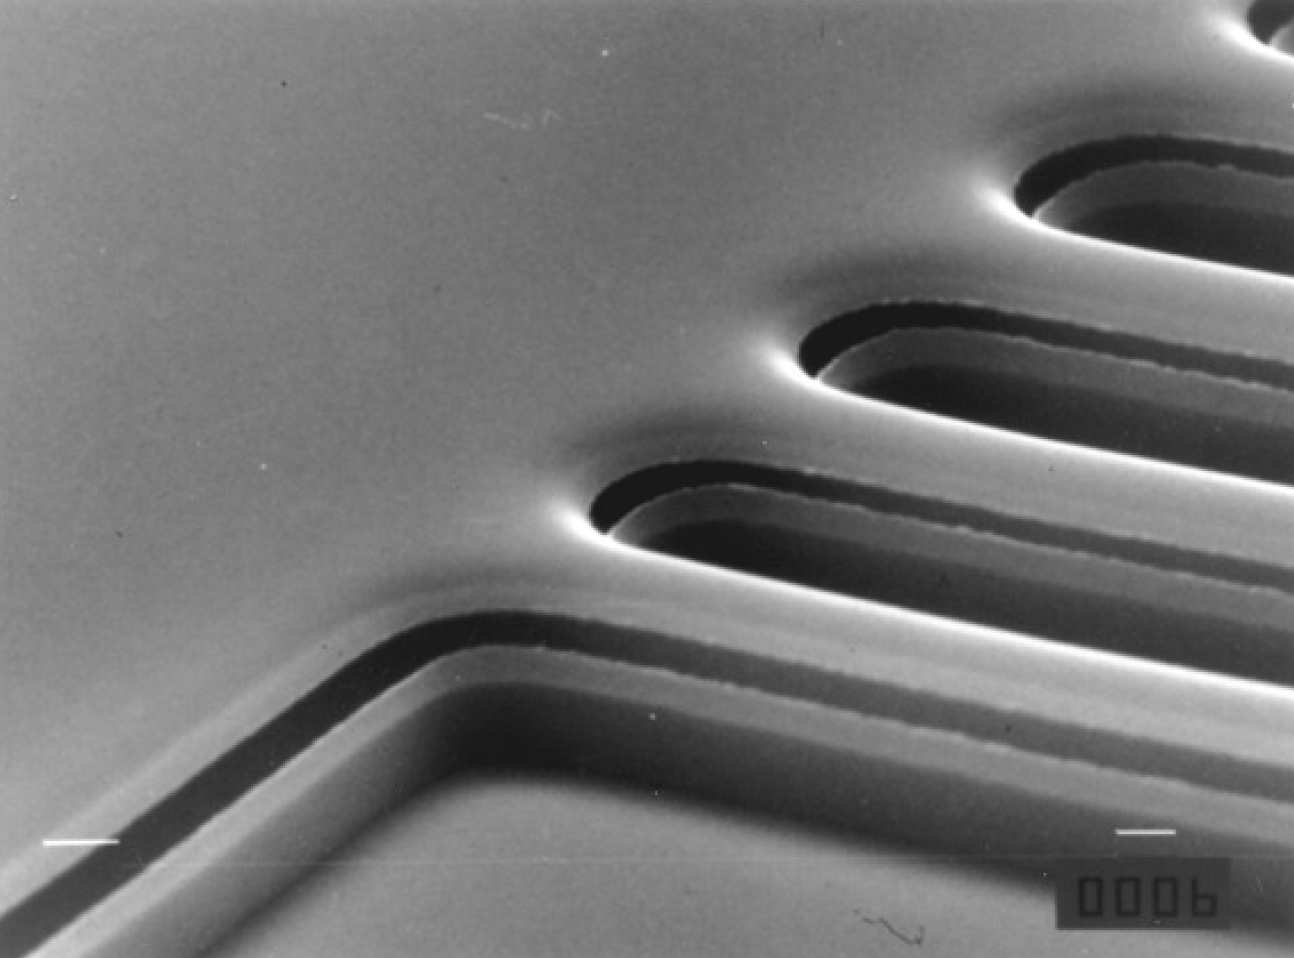 Self-aligned nanostructured electrode 